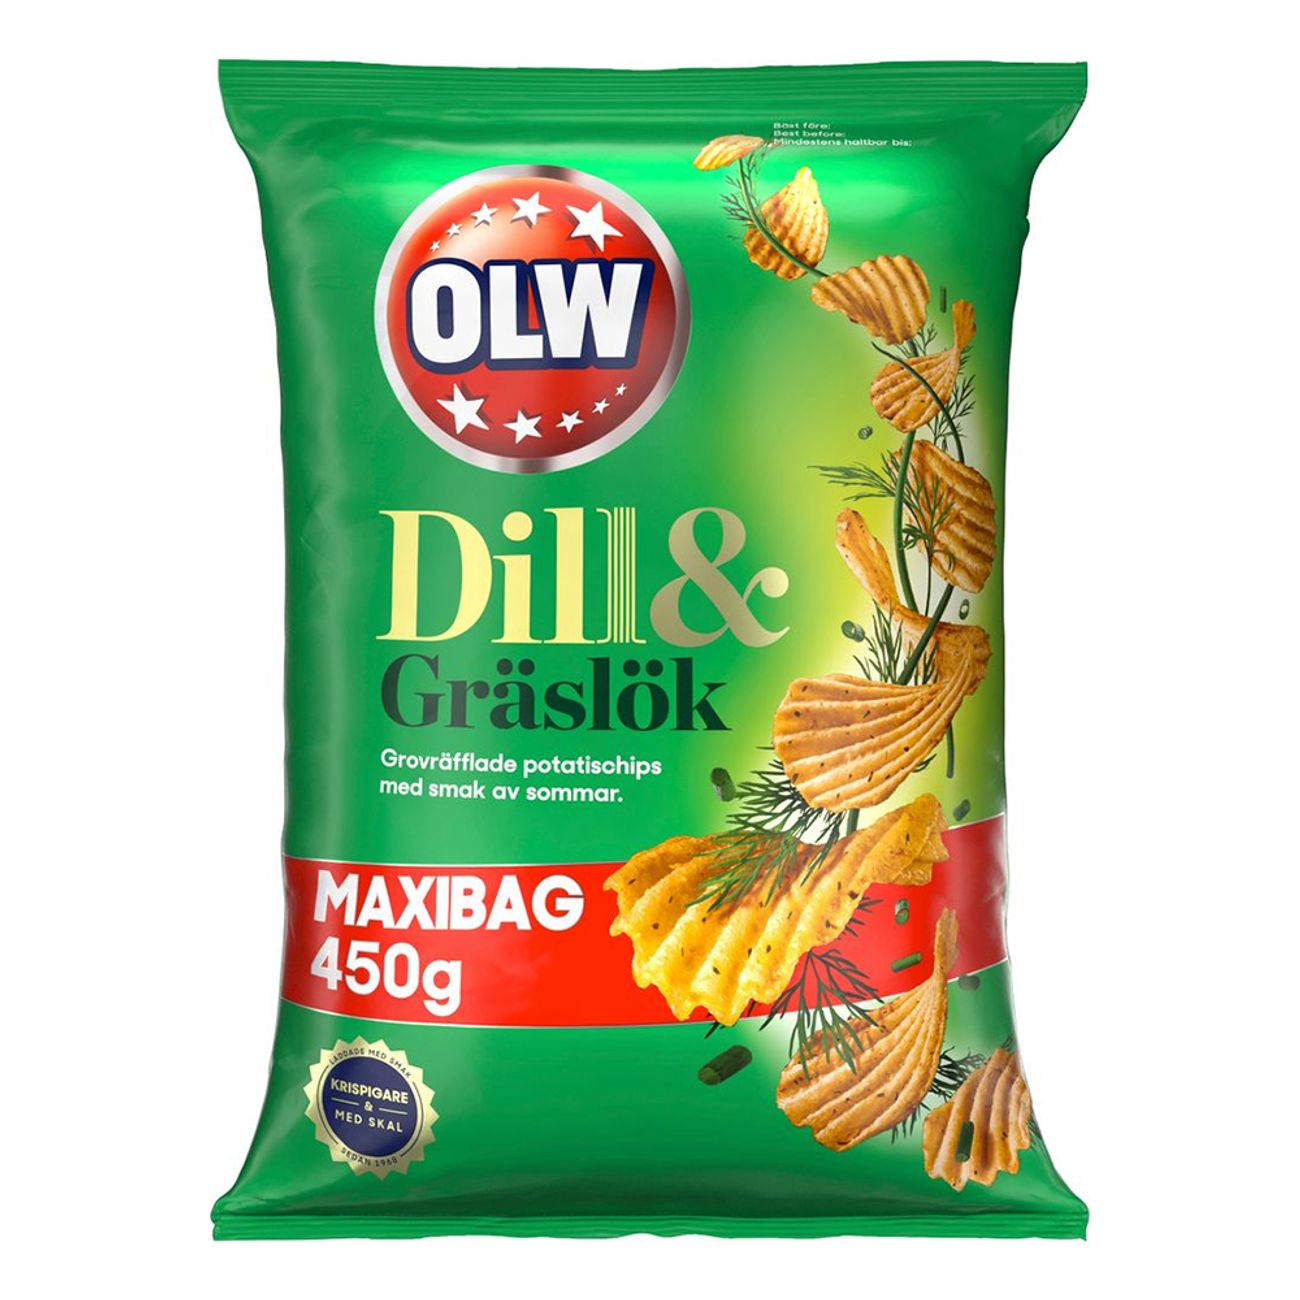 olw-maxibag-dill-graslok-73856-1